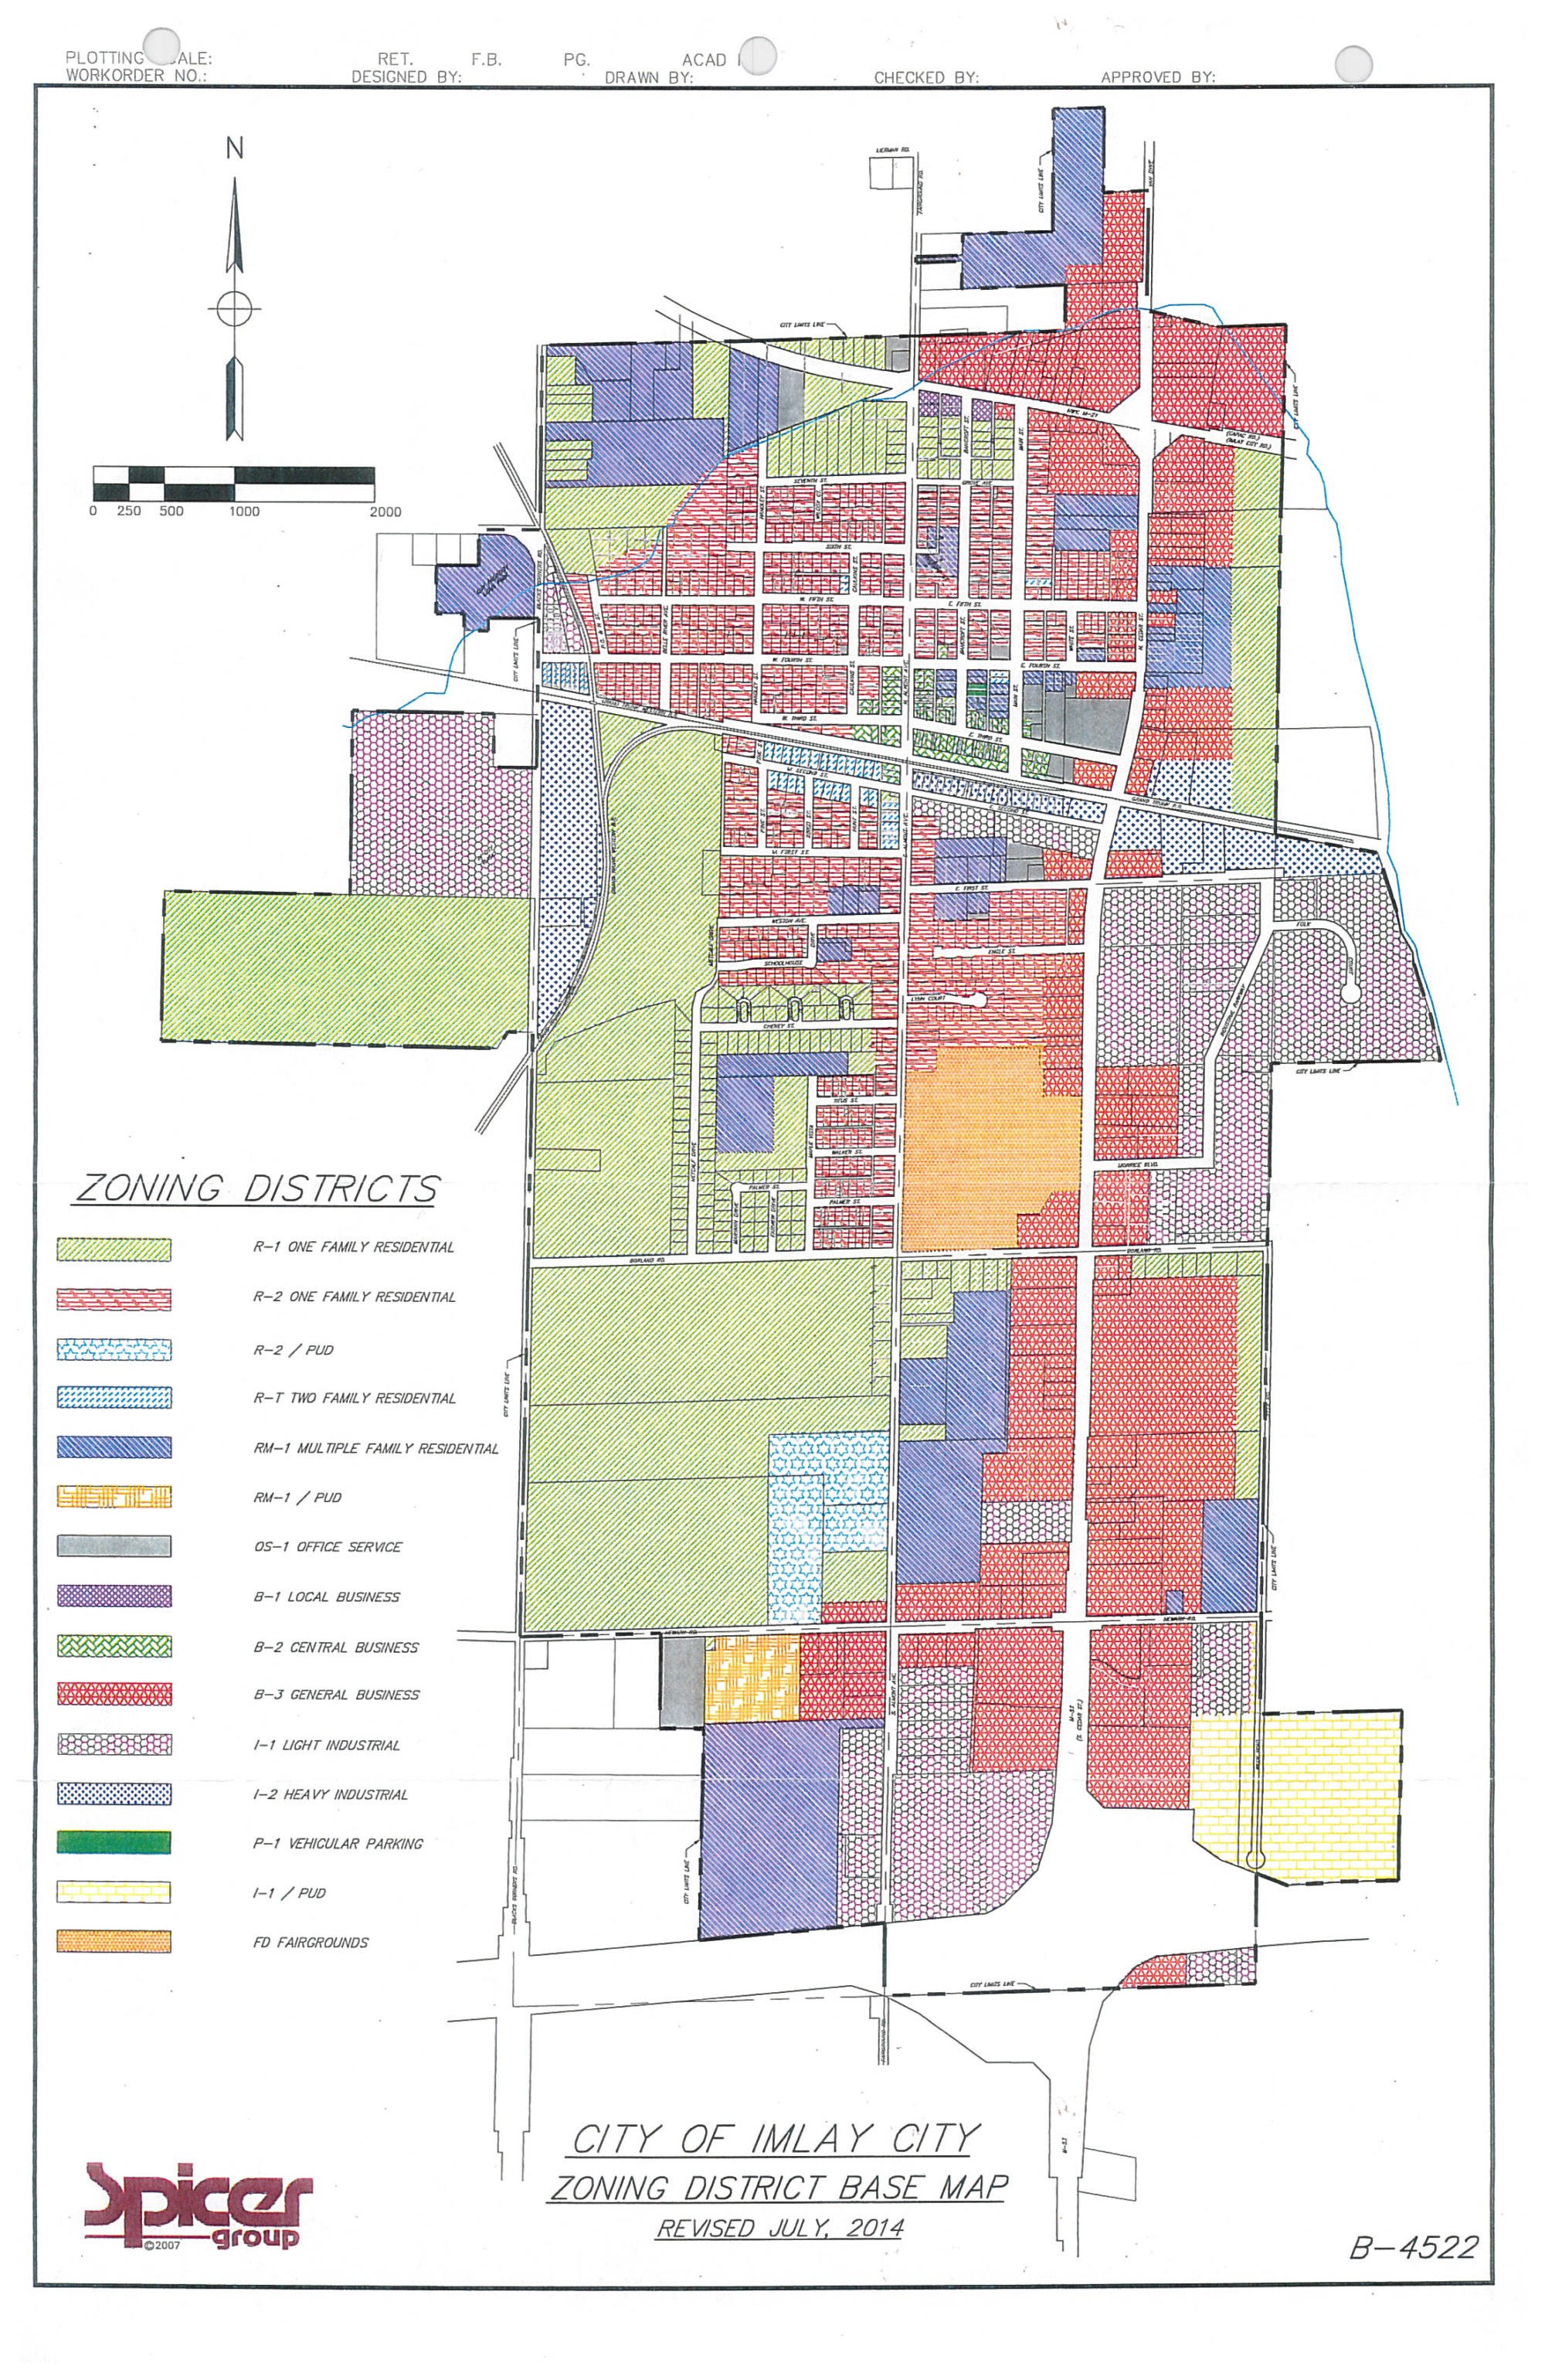 Zoning District Base Map Rev. July 2014